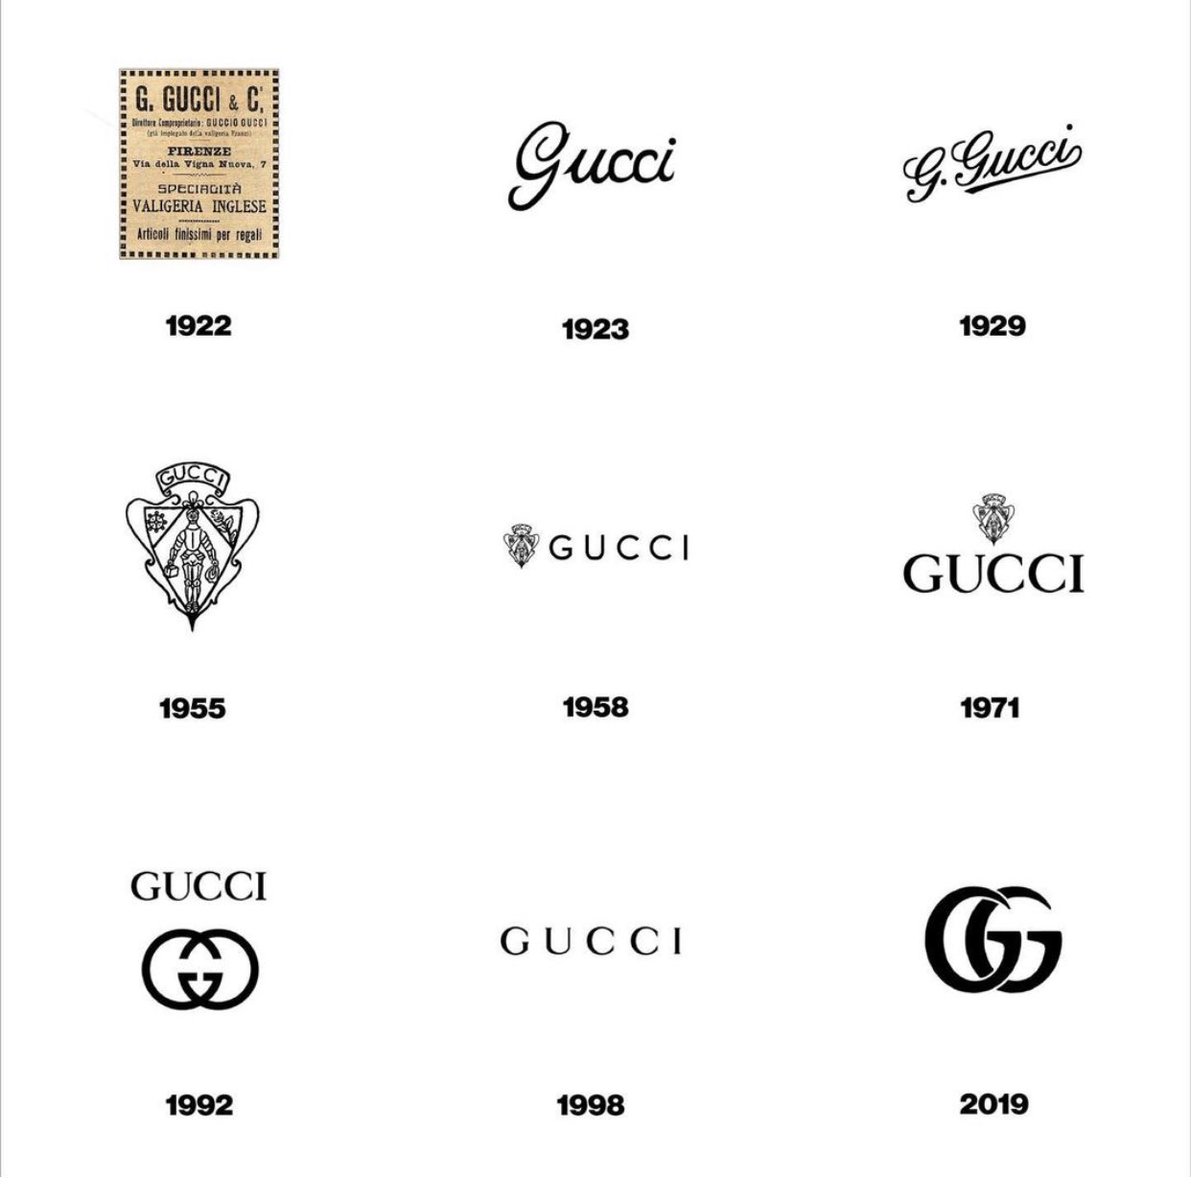 GUCCI rebranding their logo saved brand